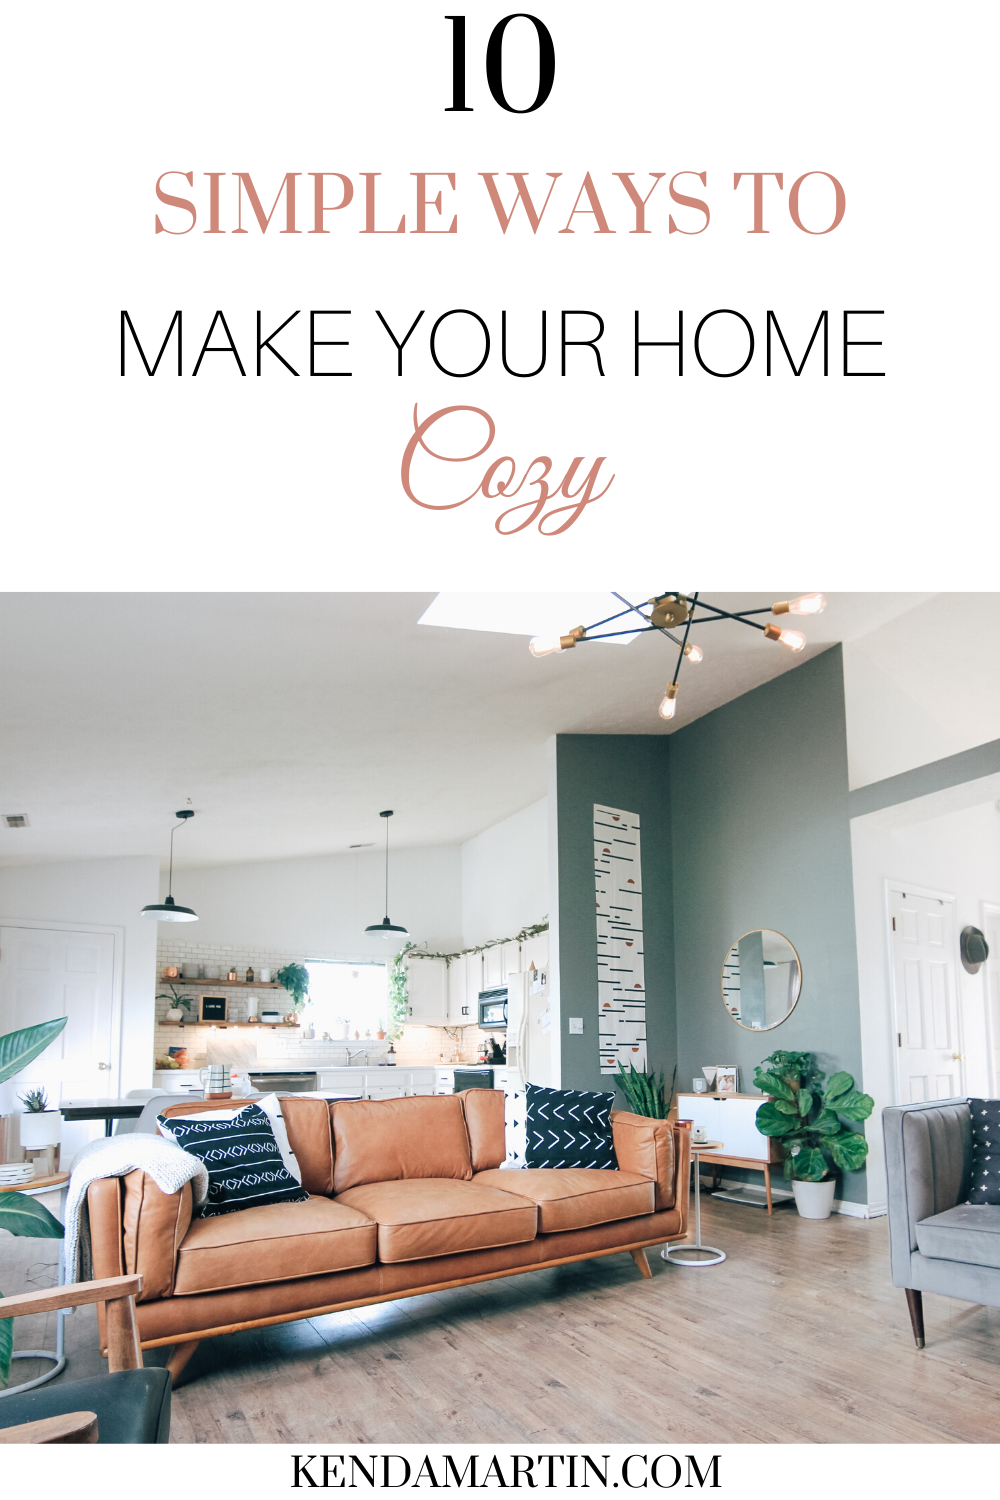 HOW TO MAKE YOUR HOME COZY - KENDA MARTIN